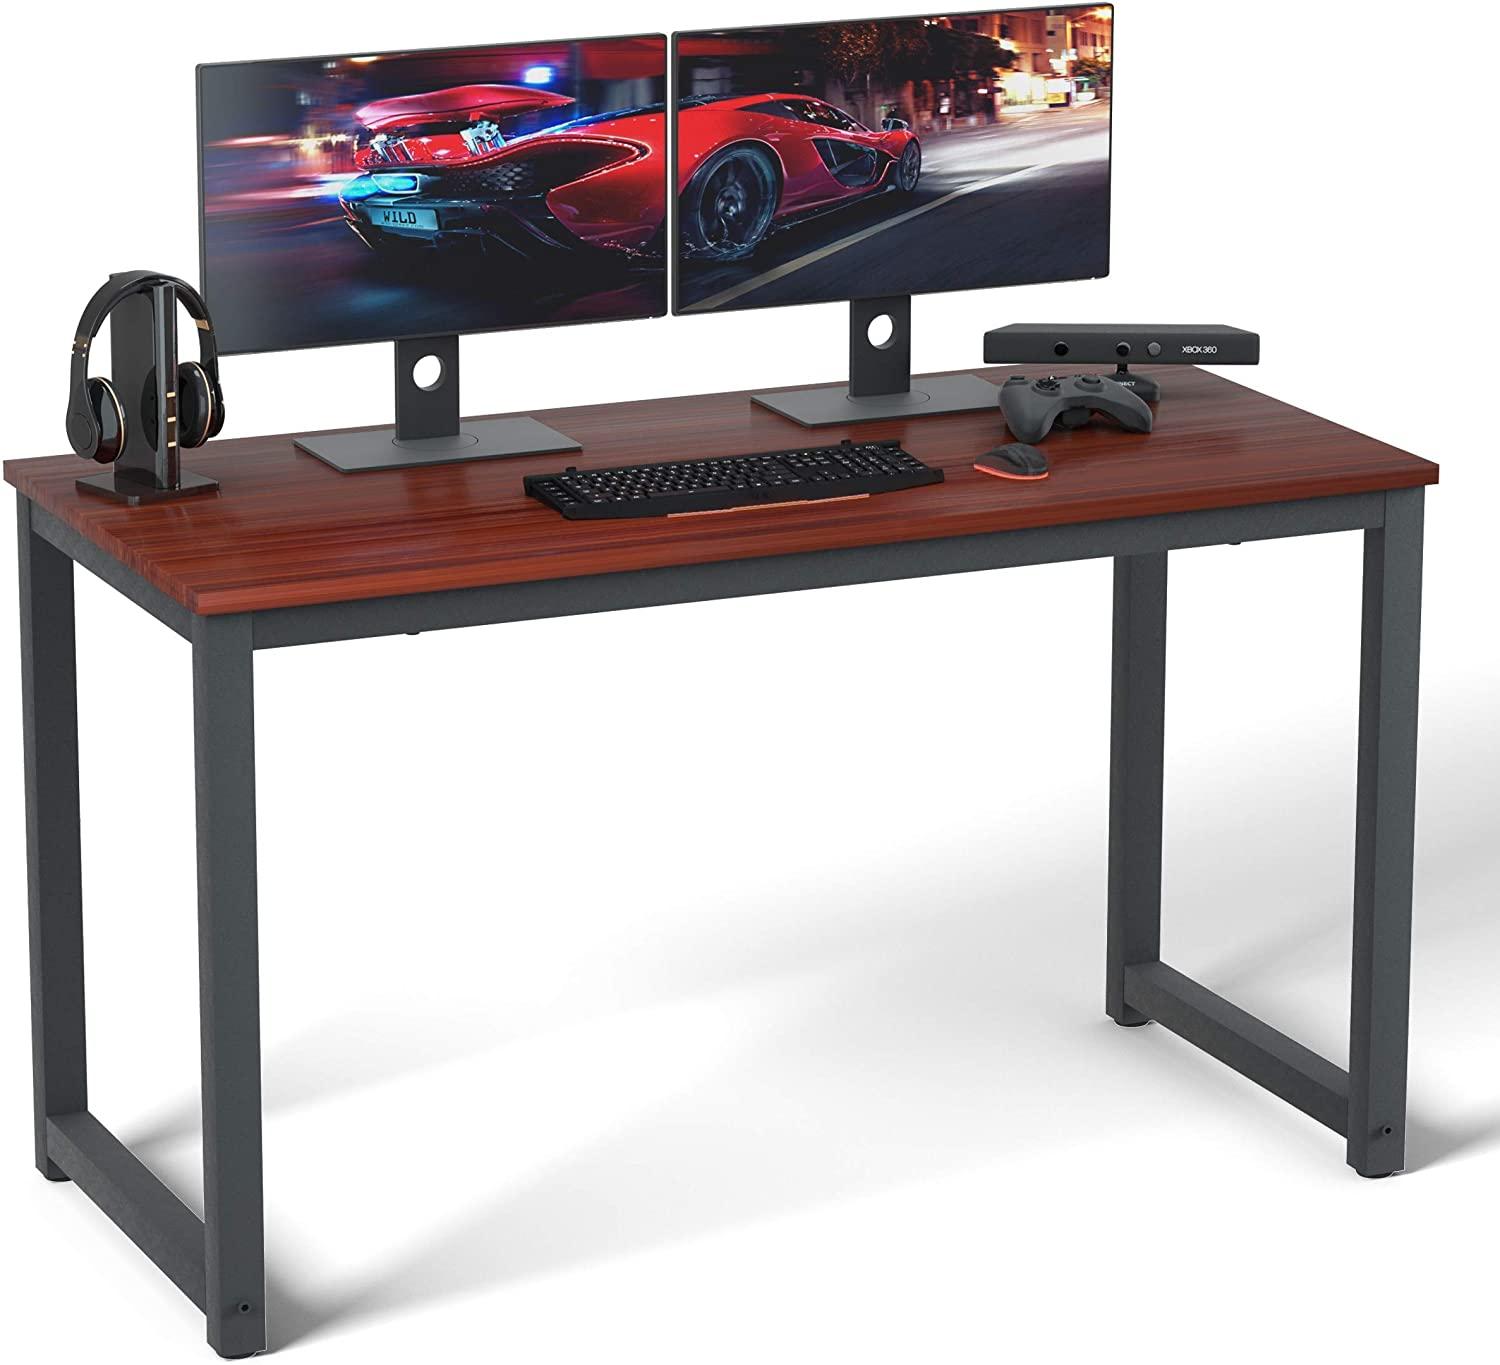 Coleshome Computer Desk 47in Modern Office Desk for $62.99 Shipped